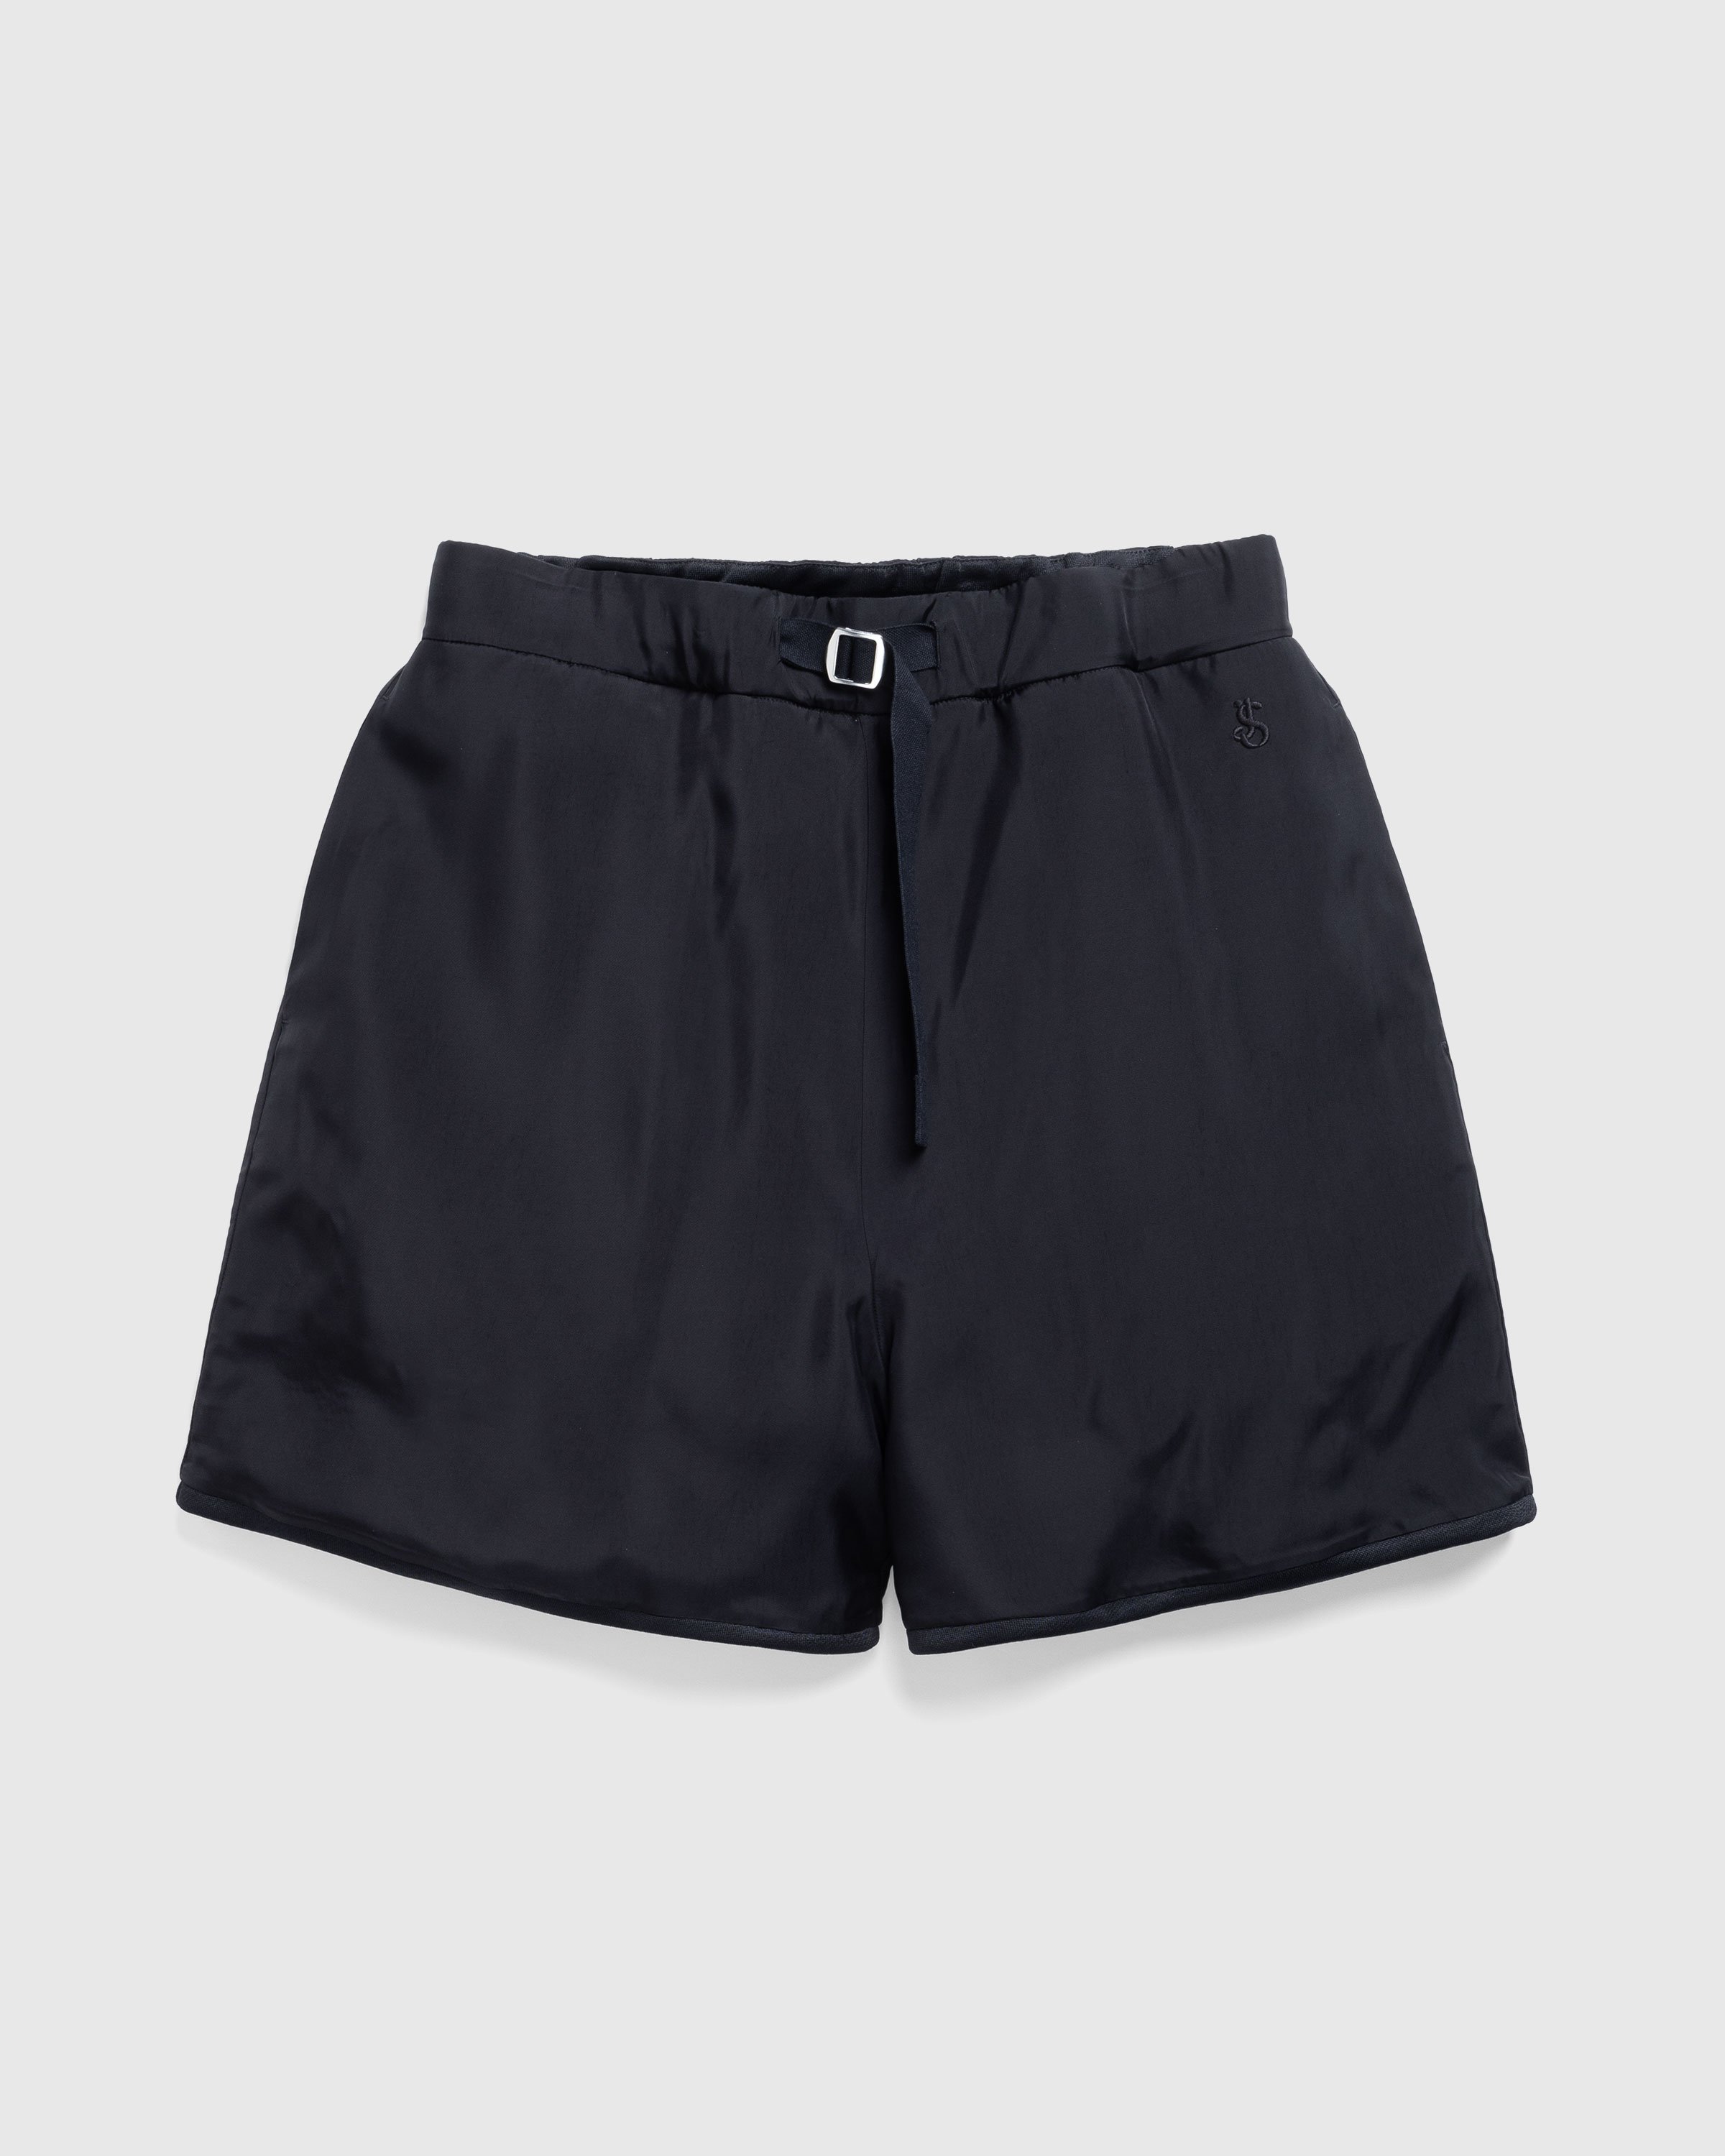 Jil Sander - Shorts - Clothing - Black - Image 1